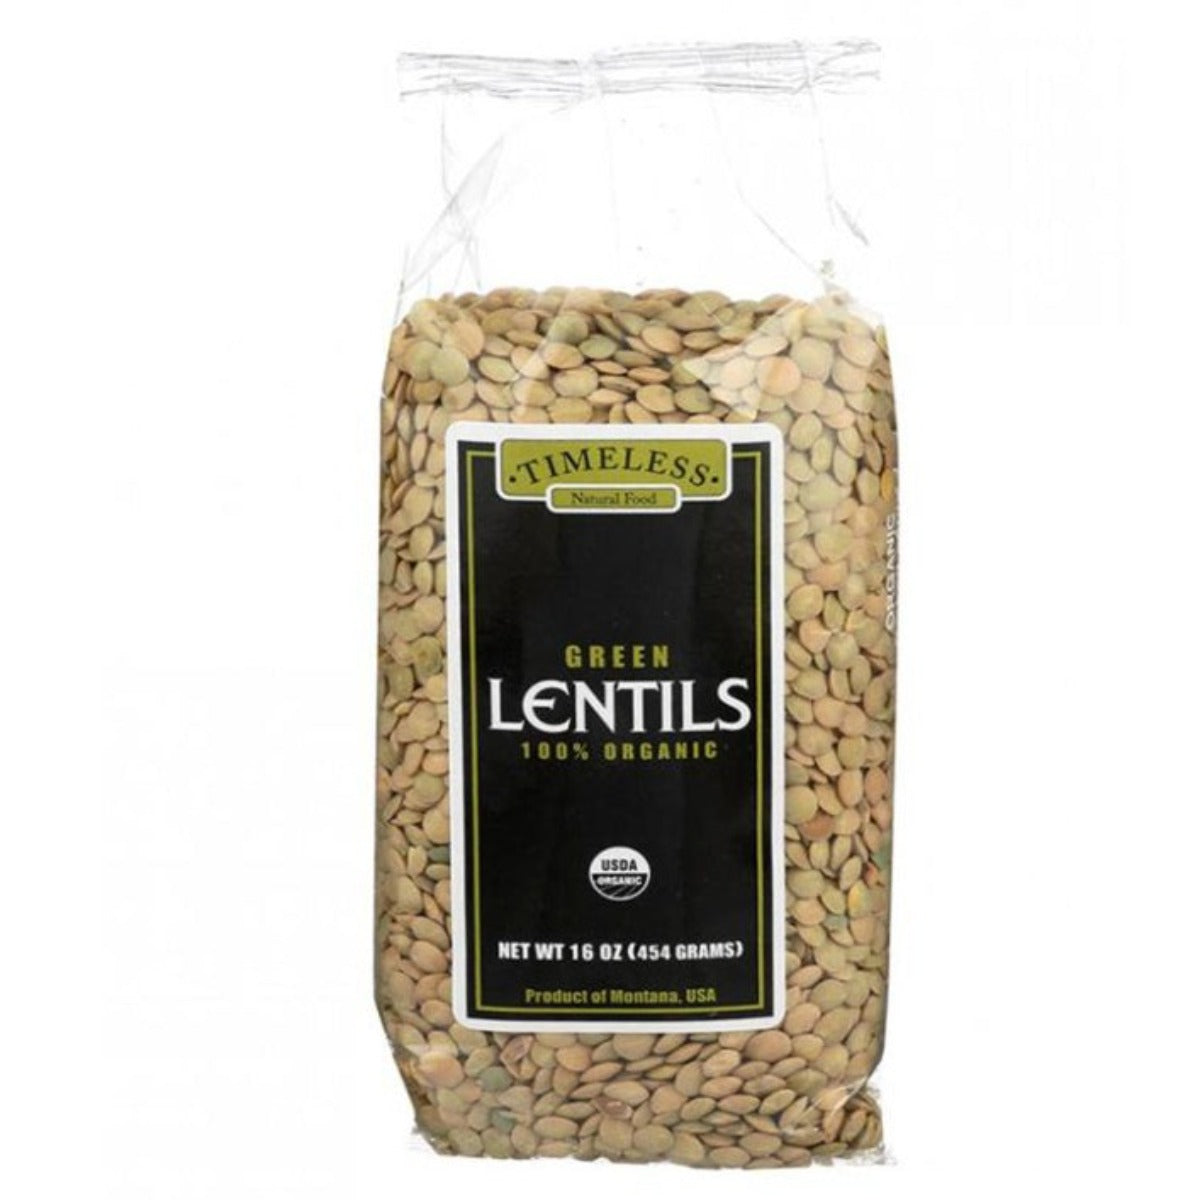 Lentils - Green - Organic - Timeless Natural Foods